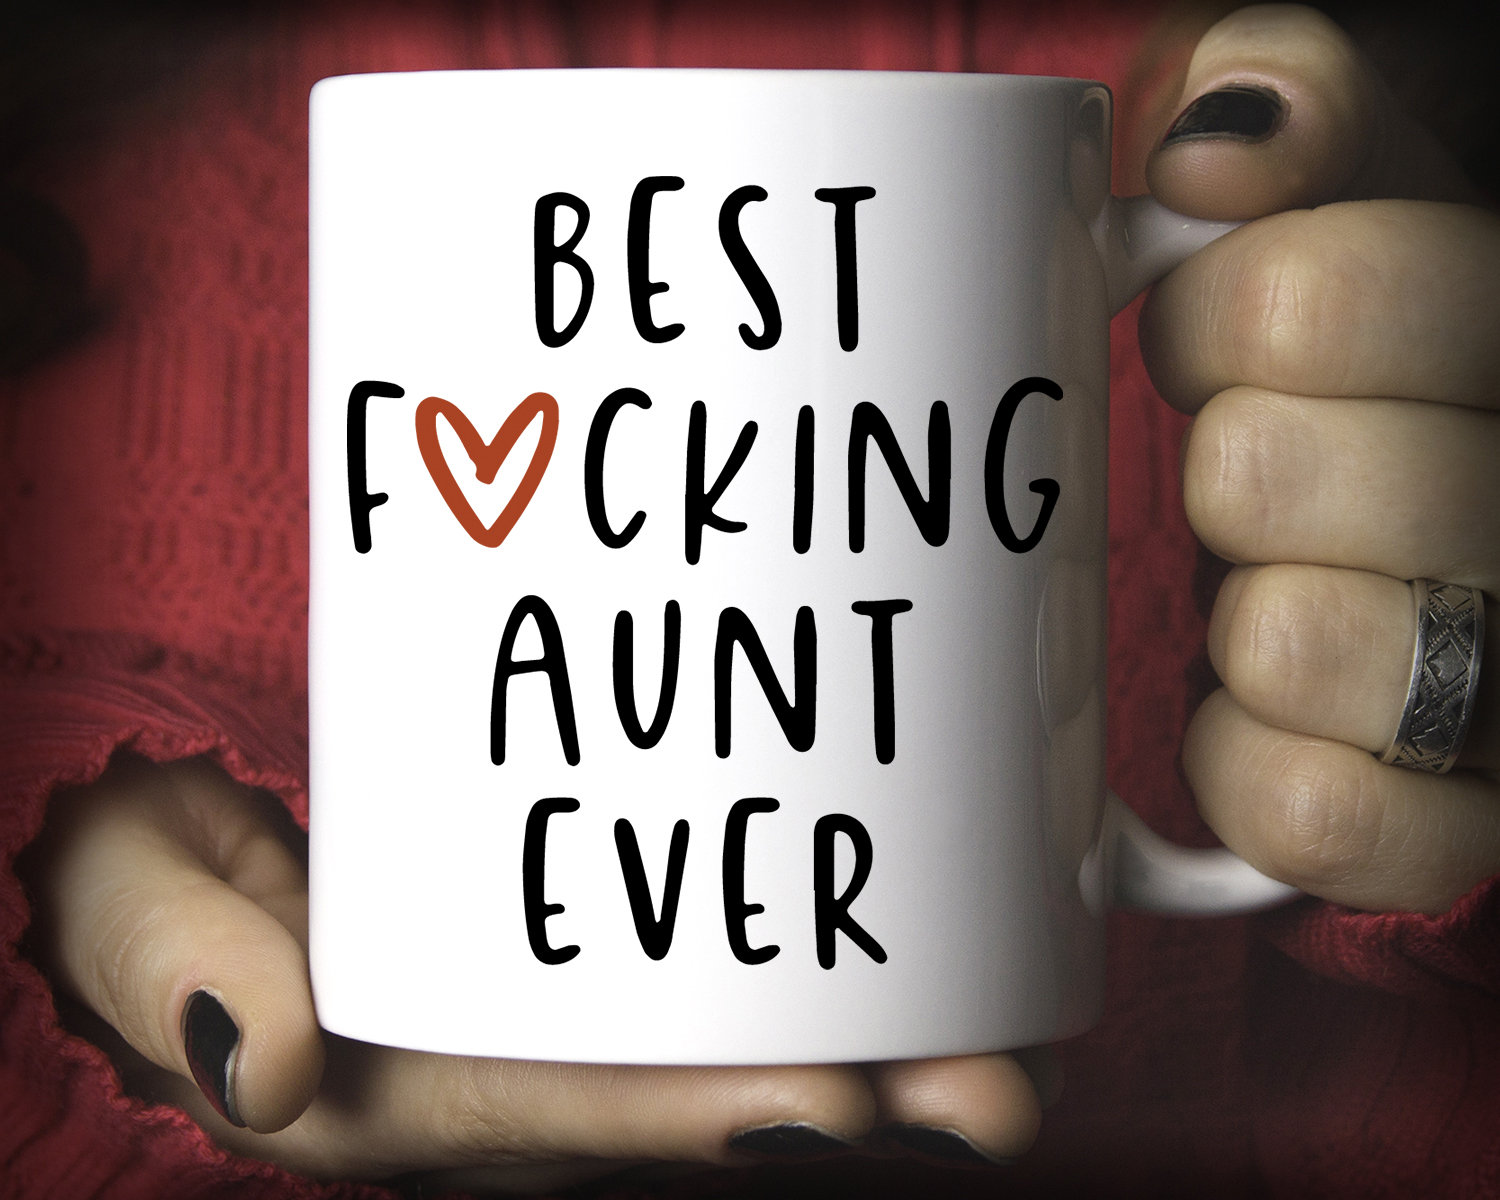 Best Aunt Ever Travel Coffee Mug Tumbler 20 Oz Travel Mug ET0032 